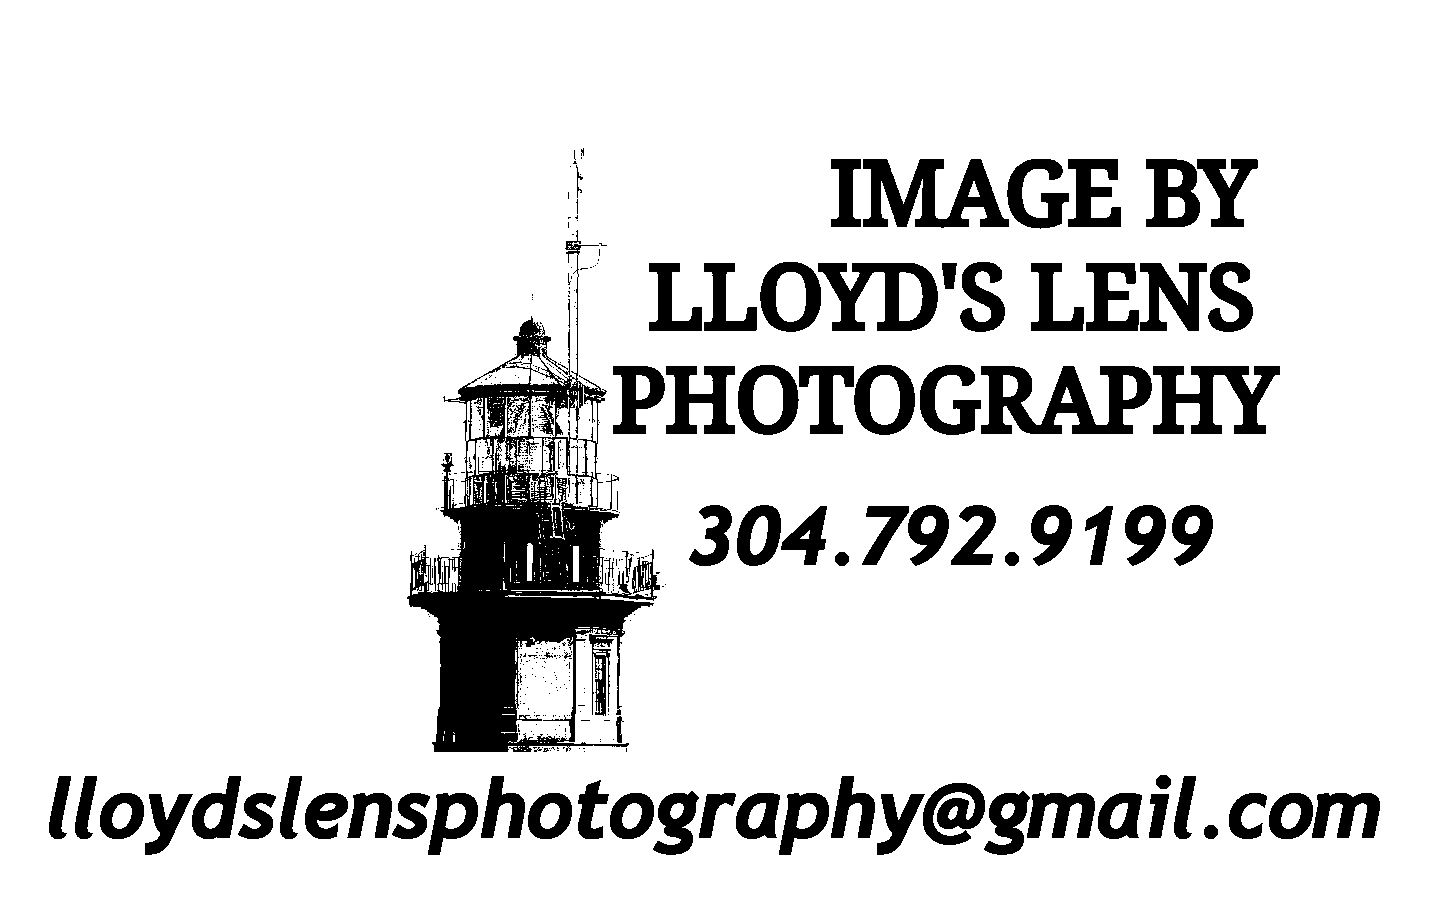 LLOYD'S LENS PHOTOGRAPHY LLC